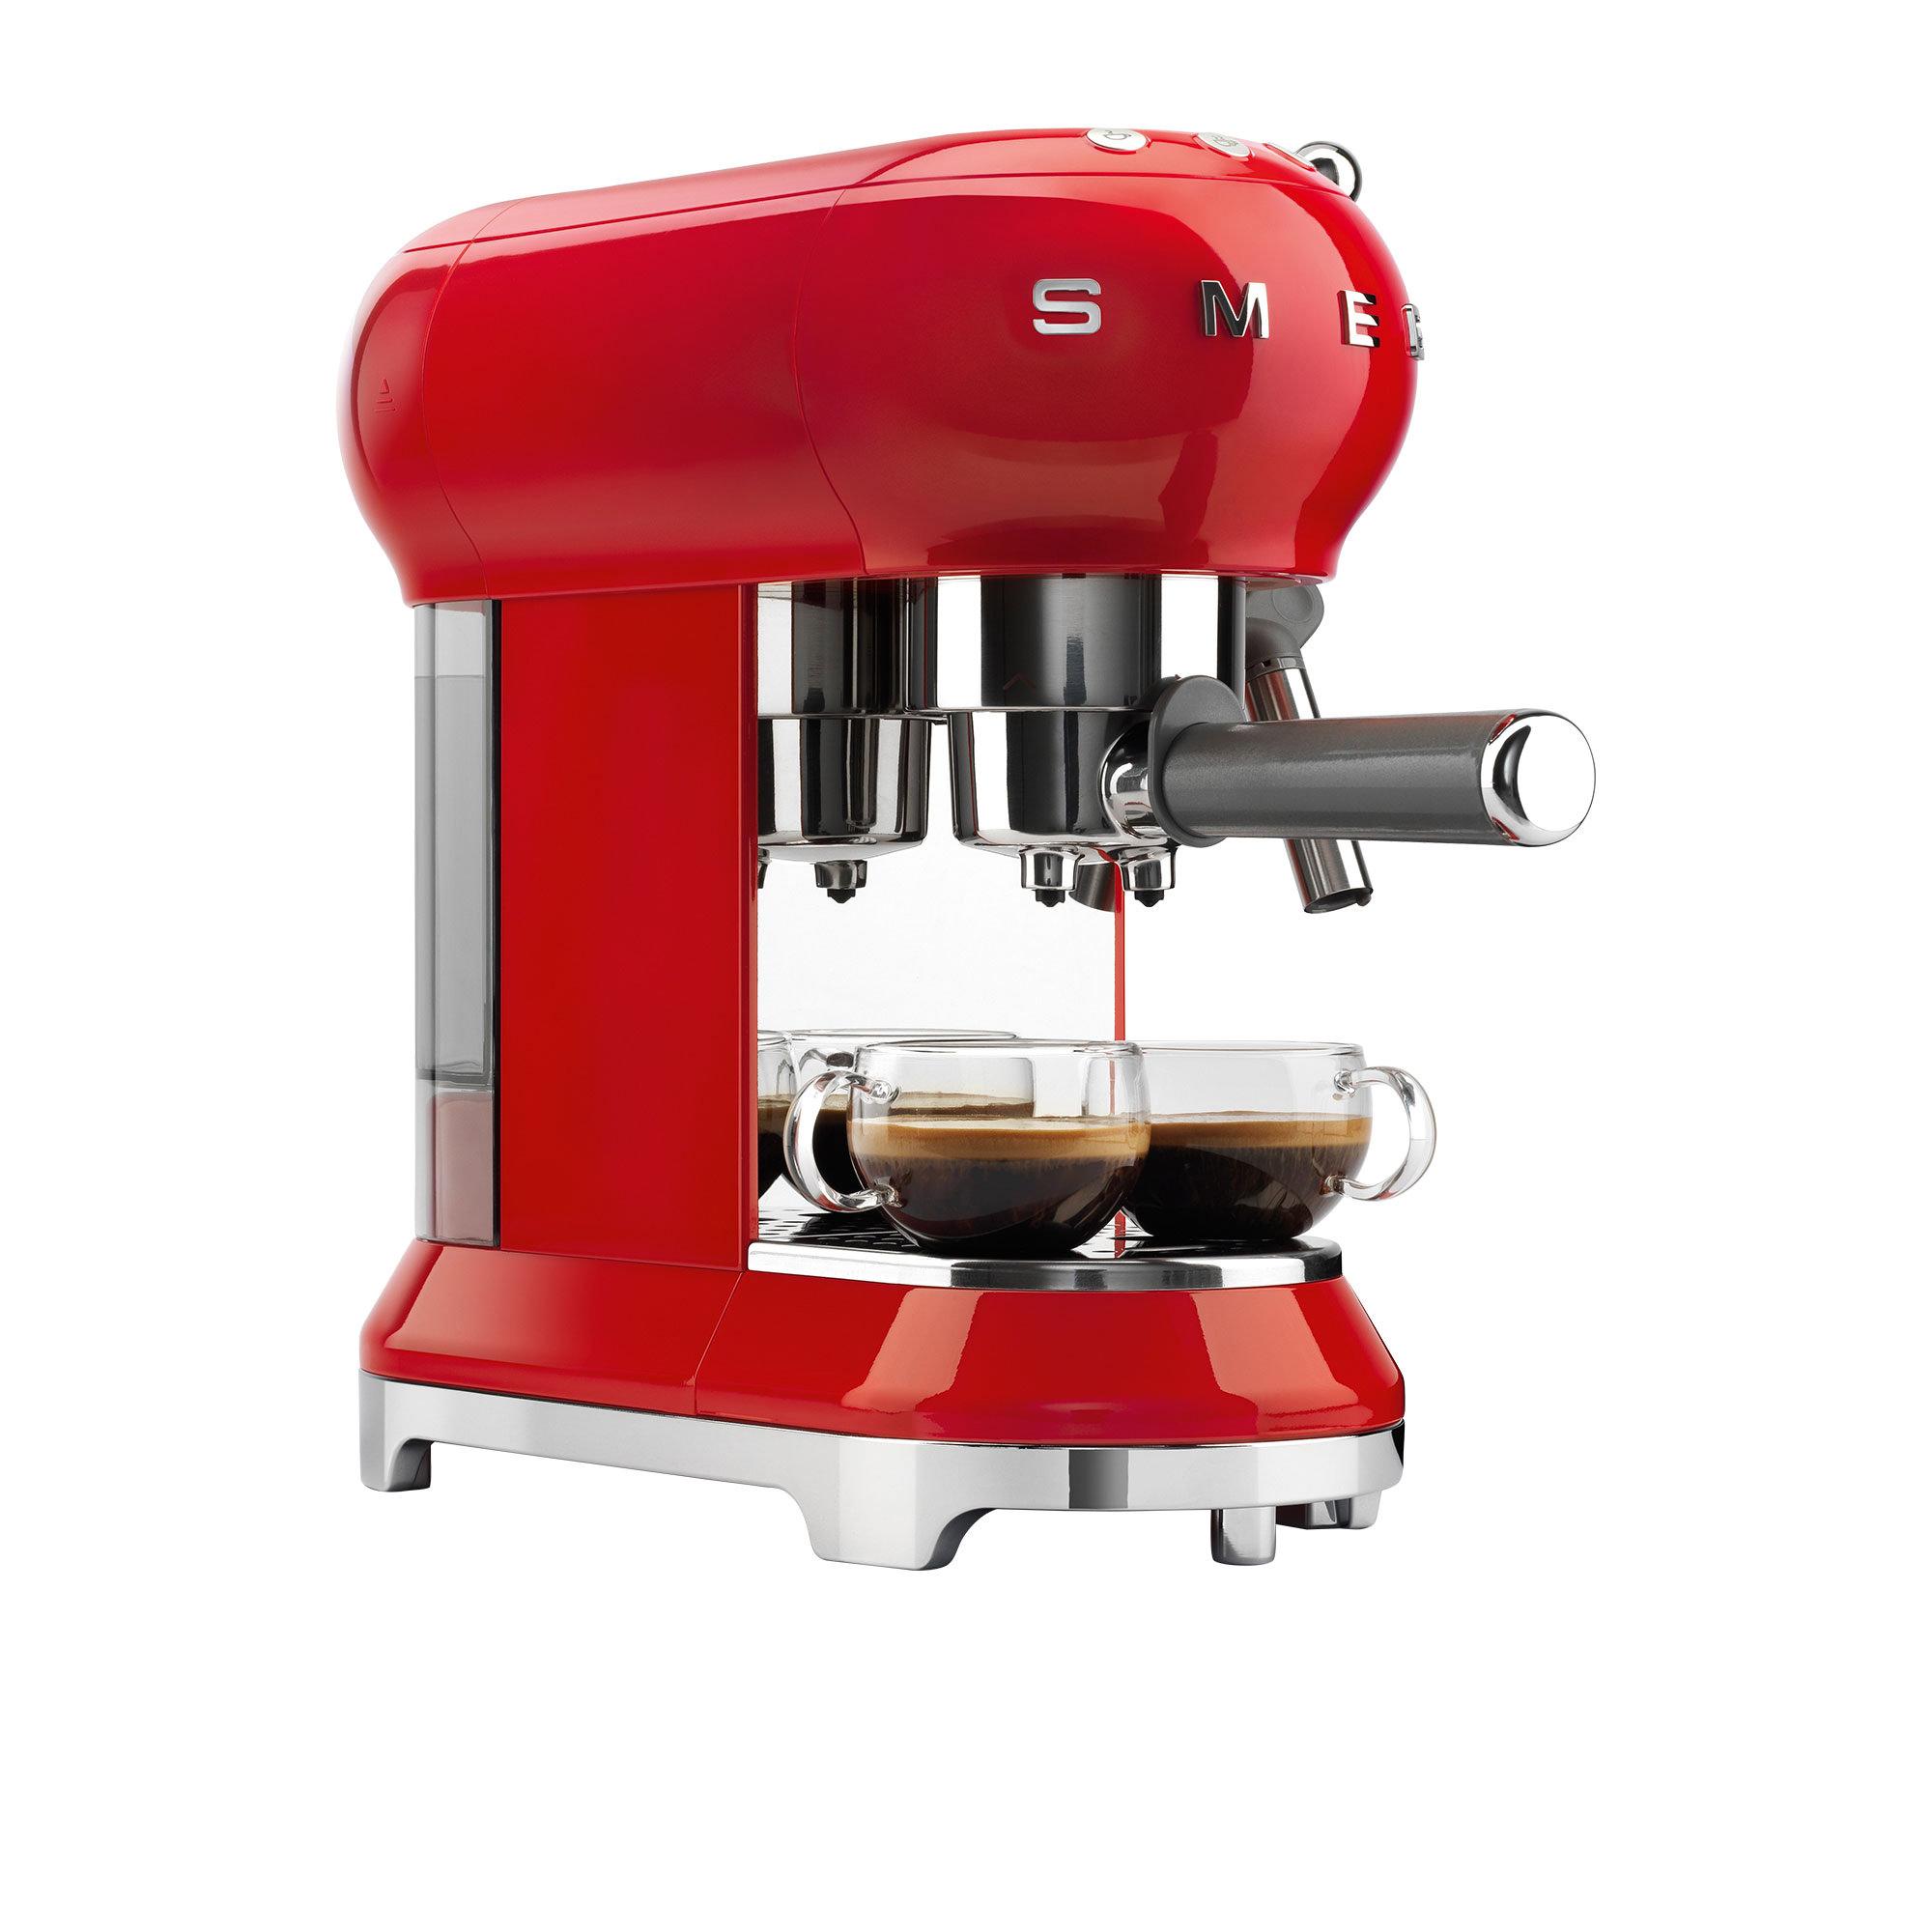 Smeg 50's Retro Style Espresso Coffee Machine Red Image 3